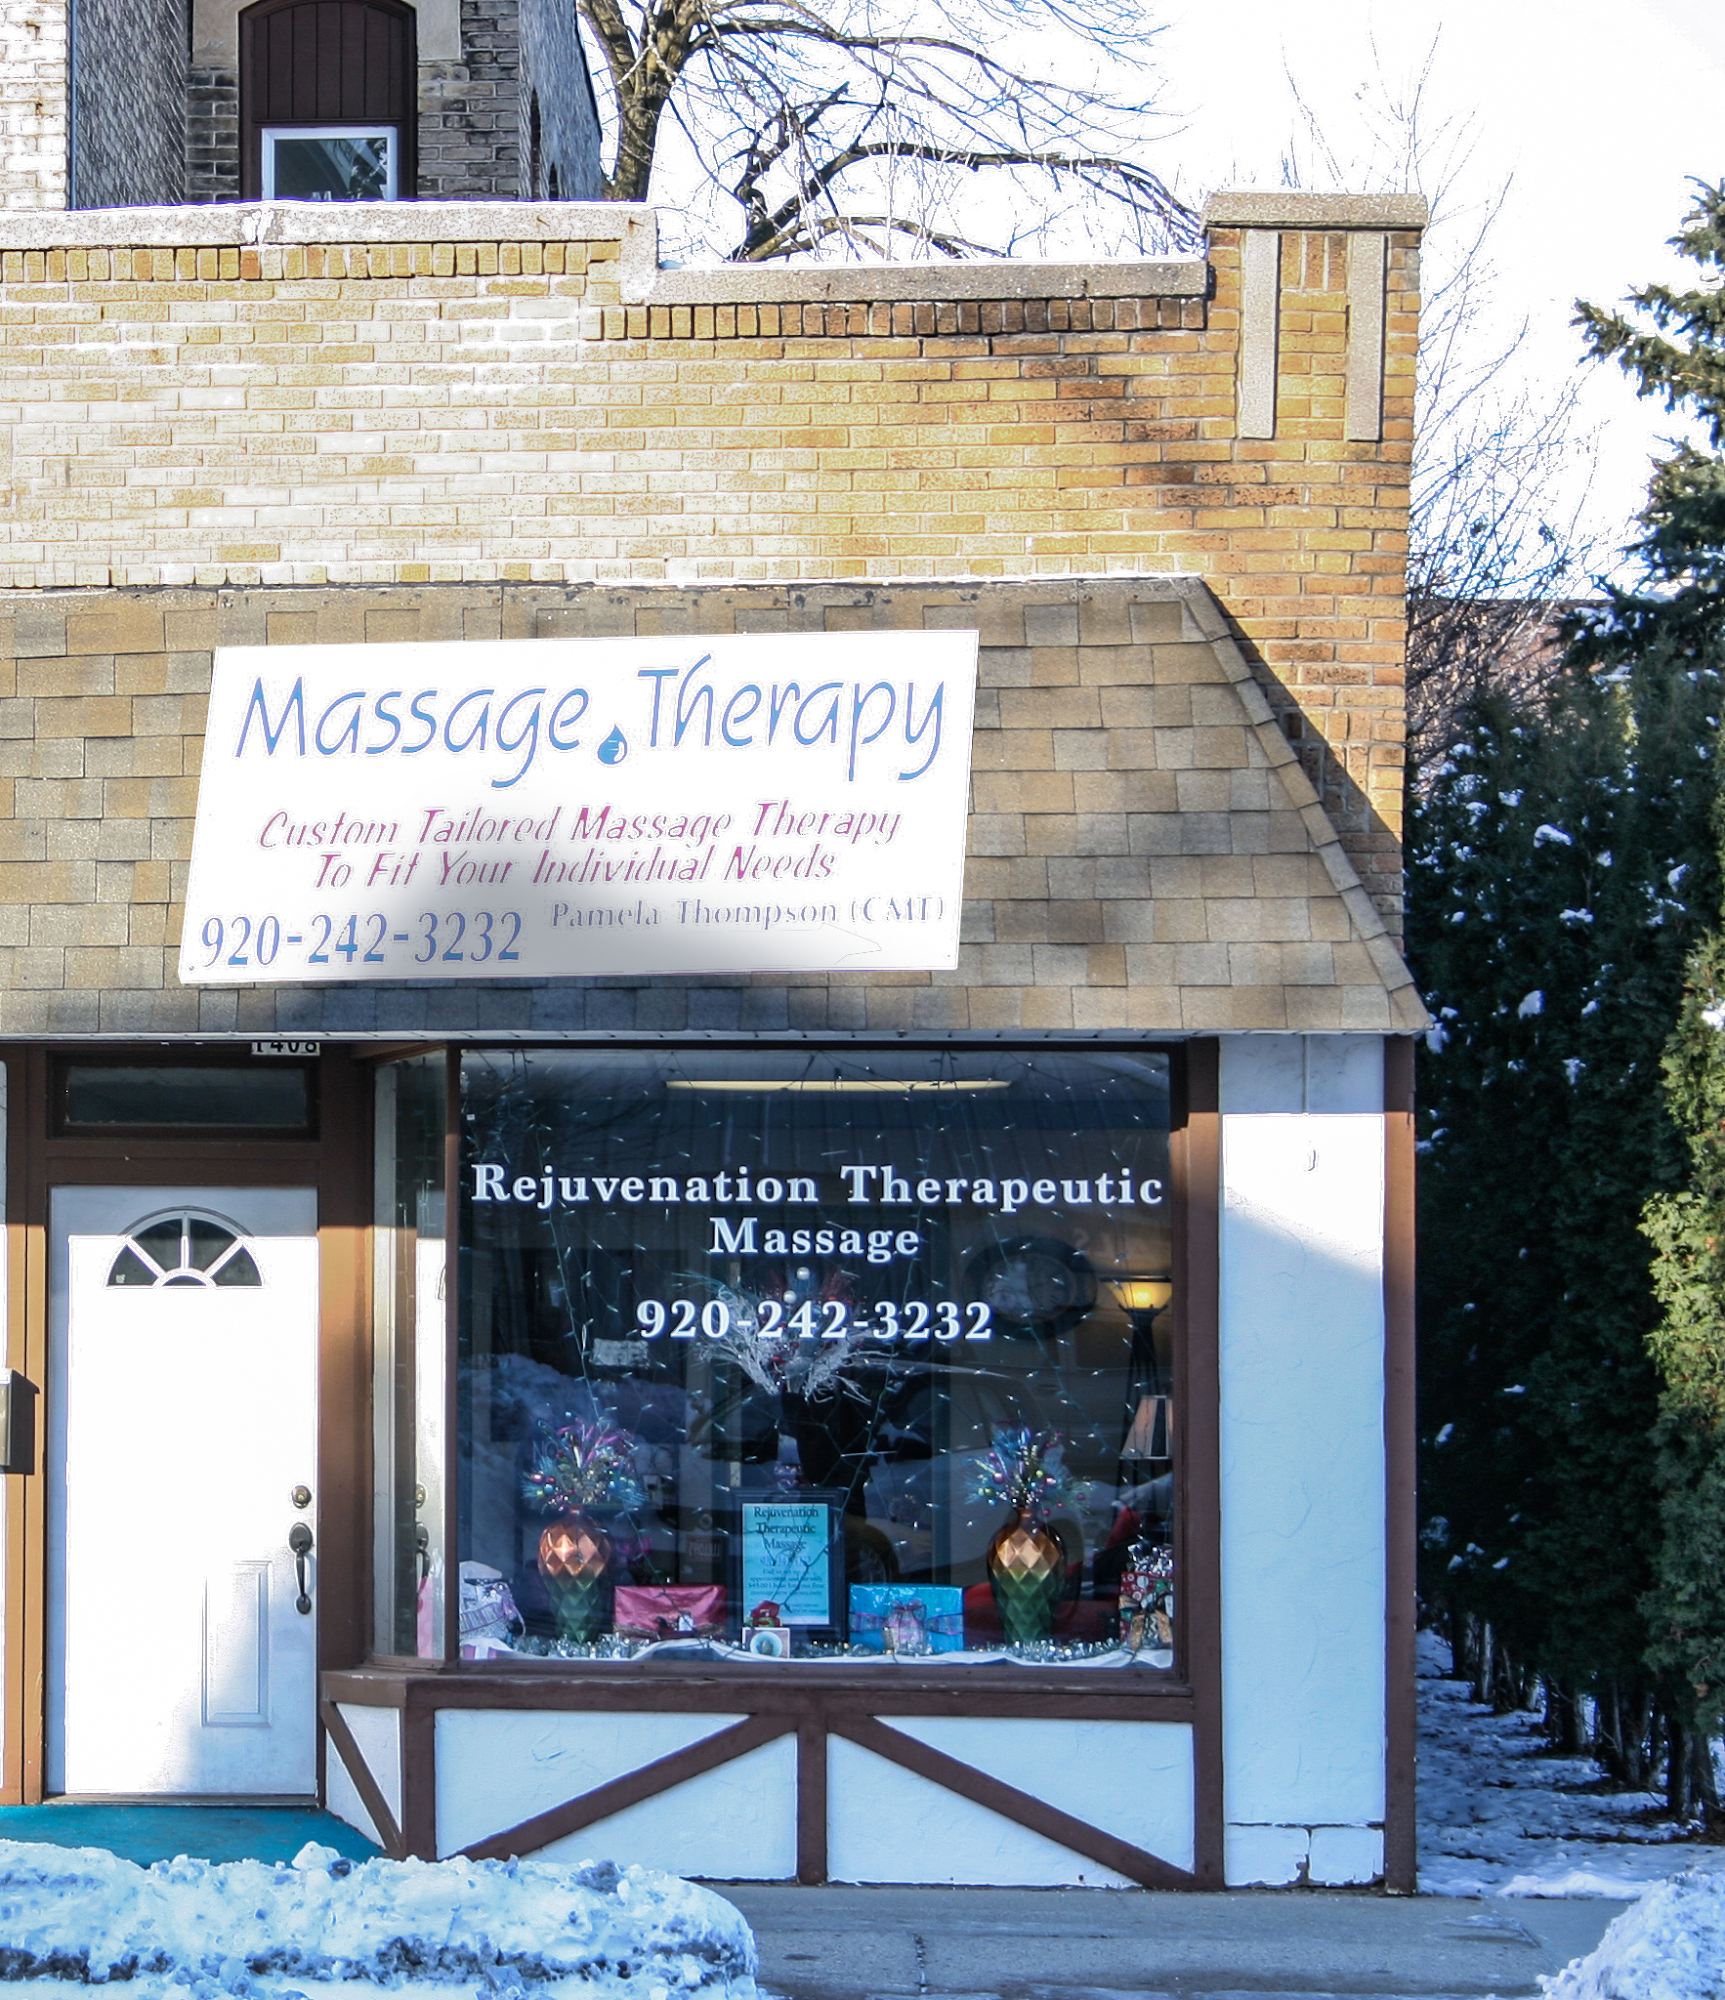 Rejuvenation Therapeutic Massage